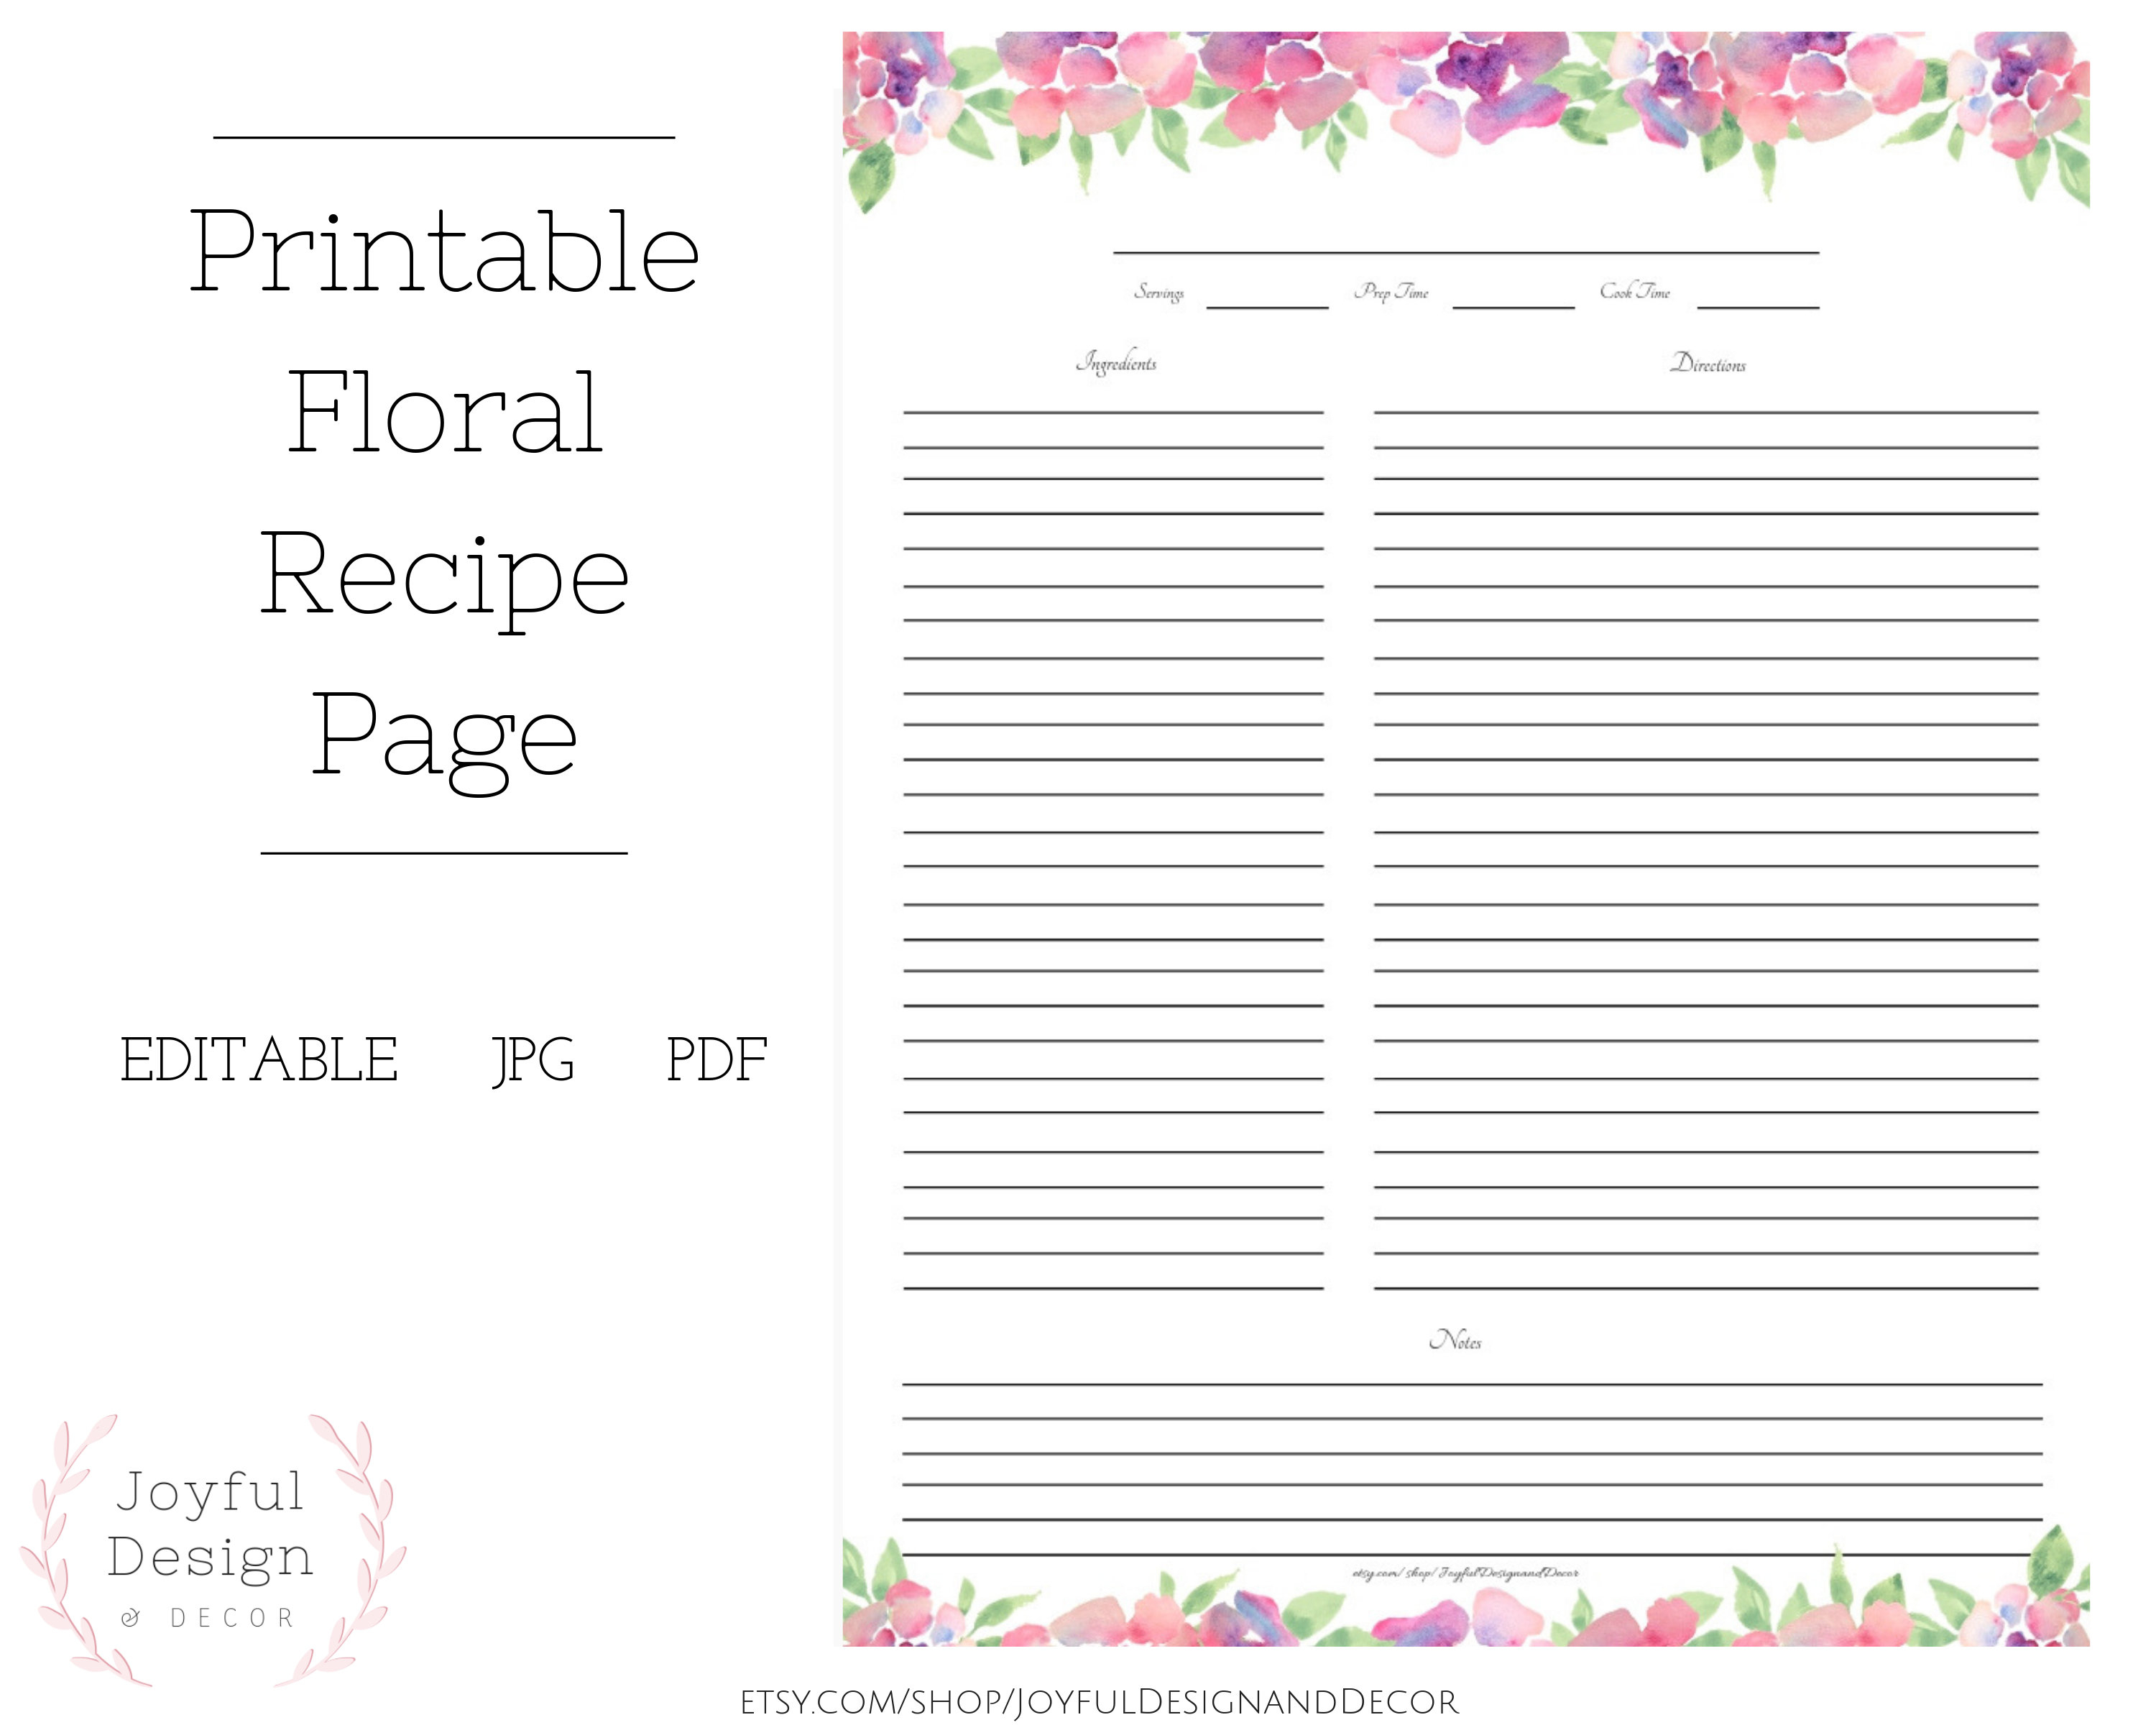 Fillable Recipe Page Floral Recipe Page Blank Recipe Template Recipe  Organization Recipe Storage Ideas Full Page Recipe Card Recipe Cards Intended For Fillable Recipe Card Template